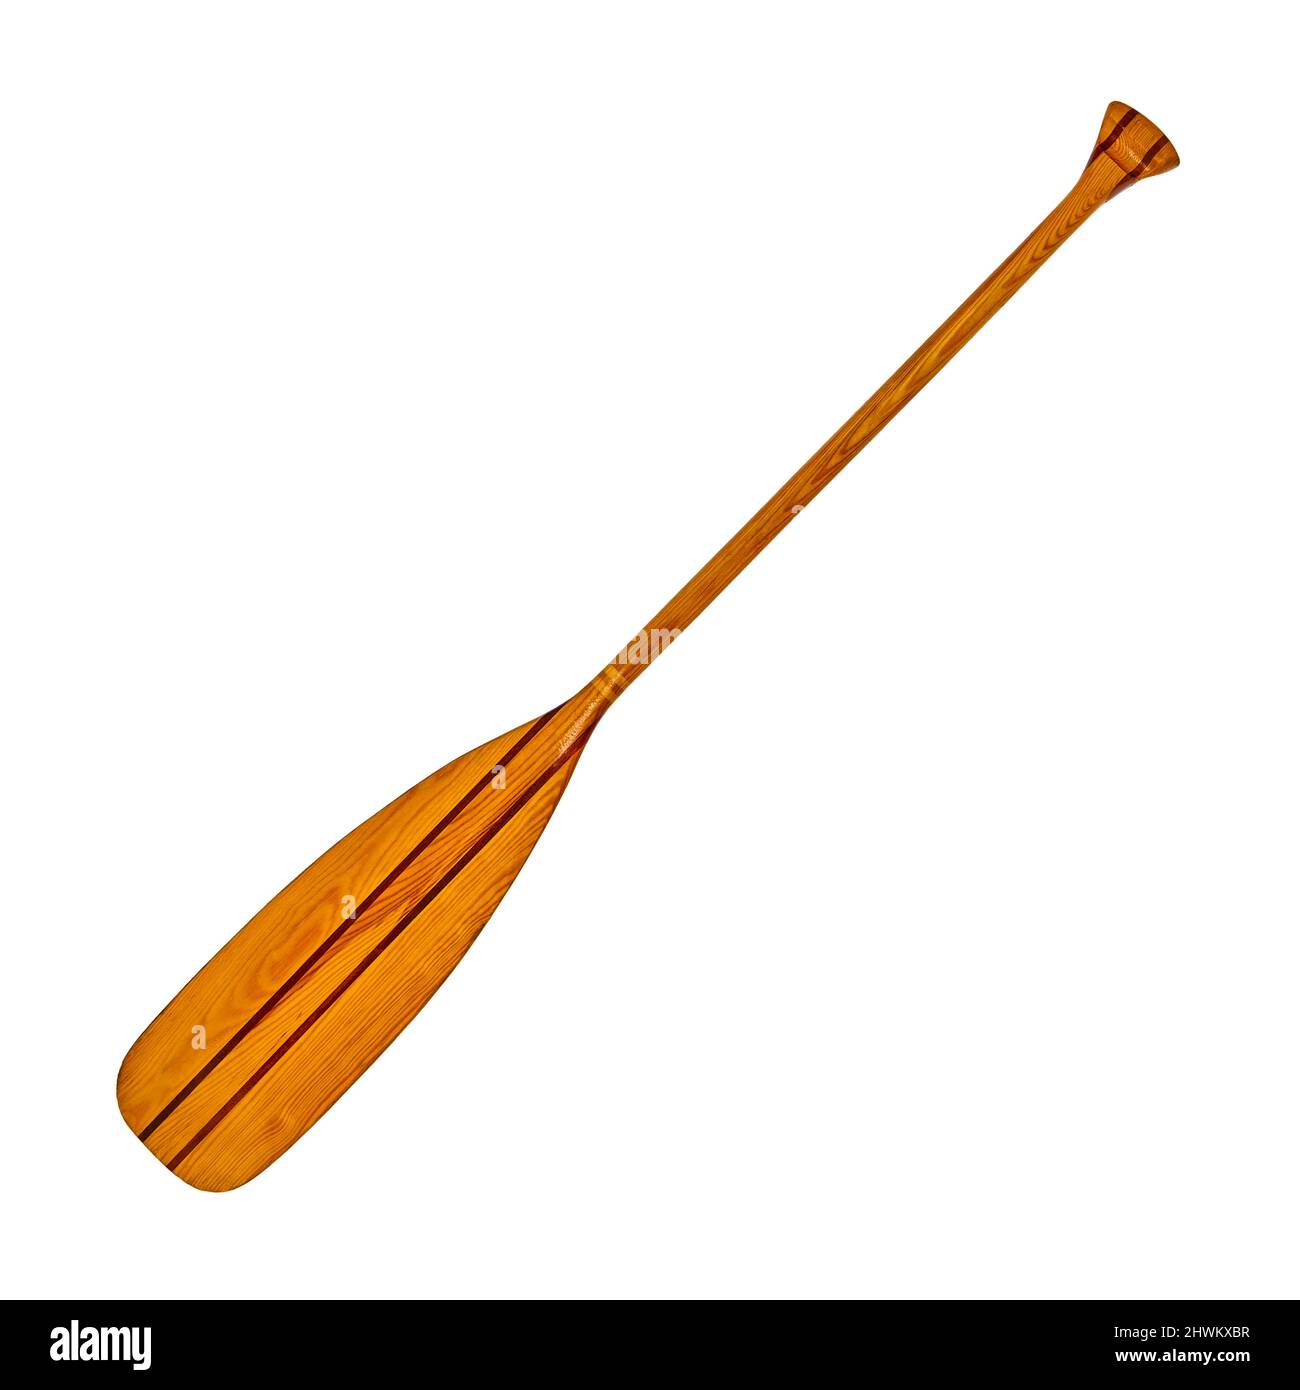 Wooden paddle for kayak isolated on white background. Stock Photo